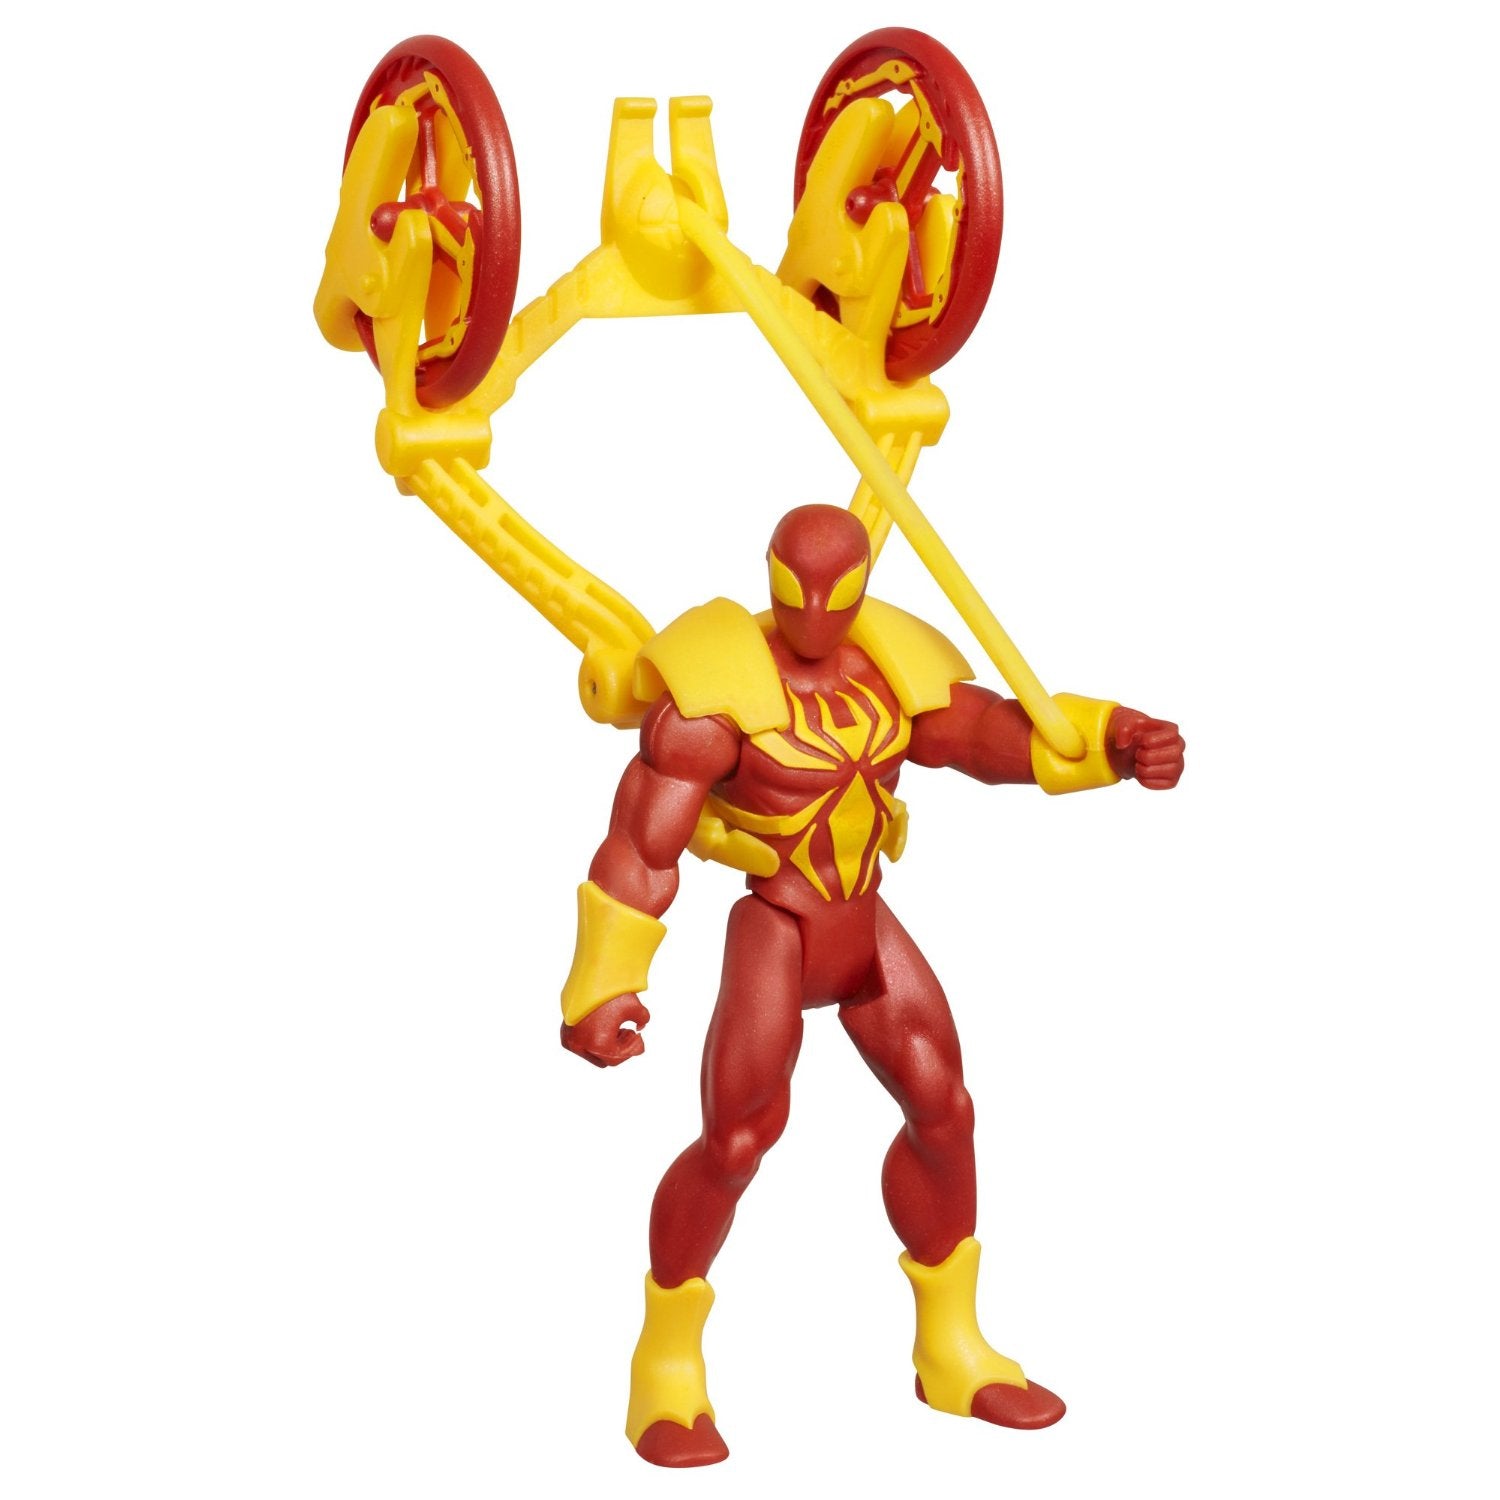 Spider-Man Toys - Catapult Smash Iron Spider-Man